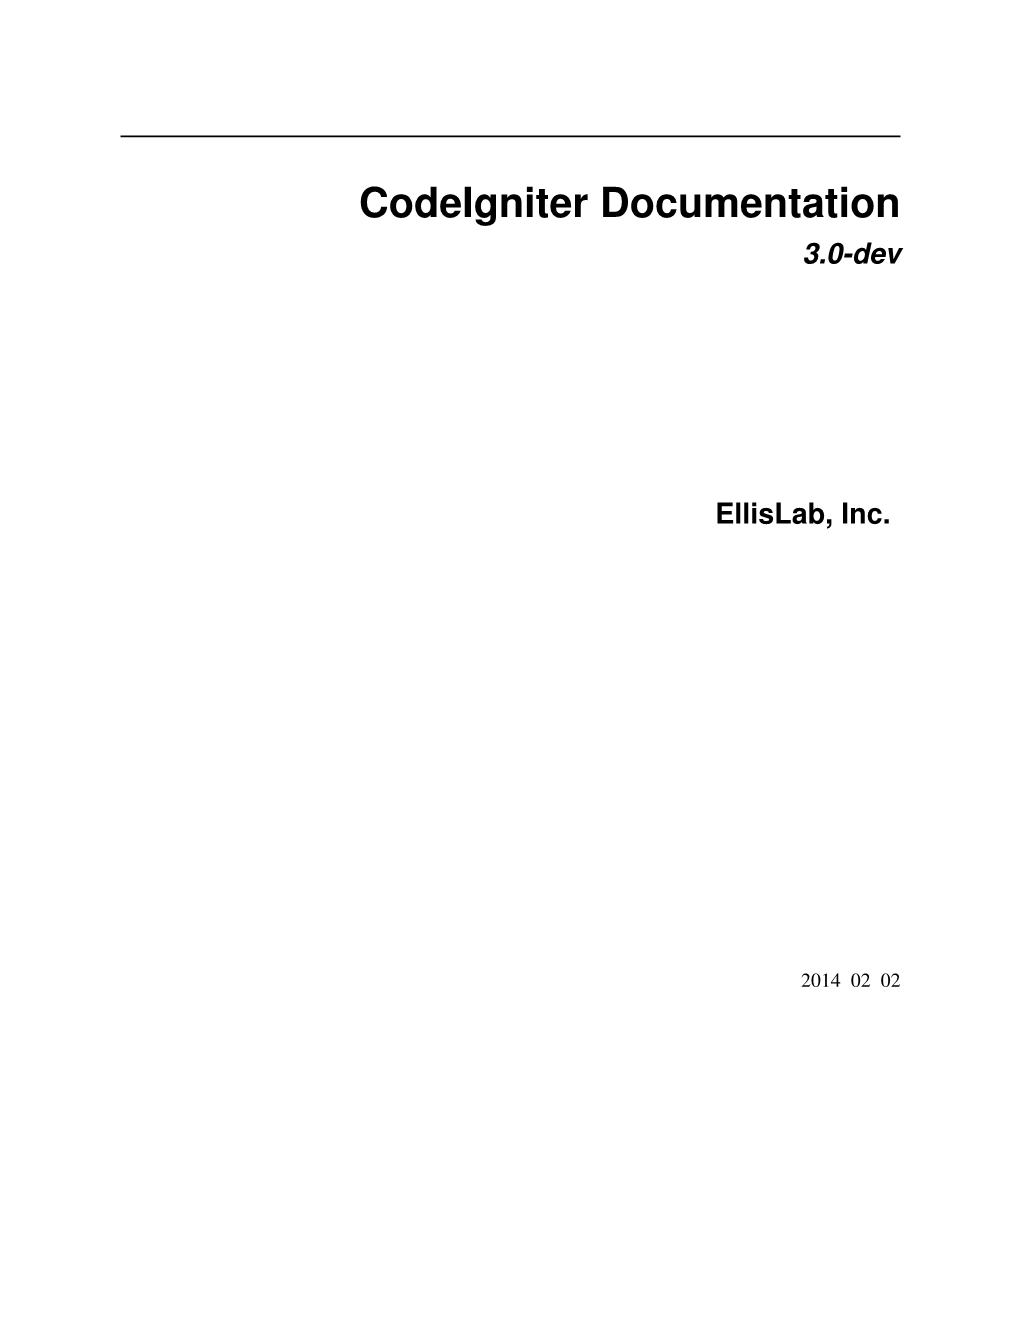 Codeigniter Documentation 3.0-Dev